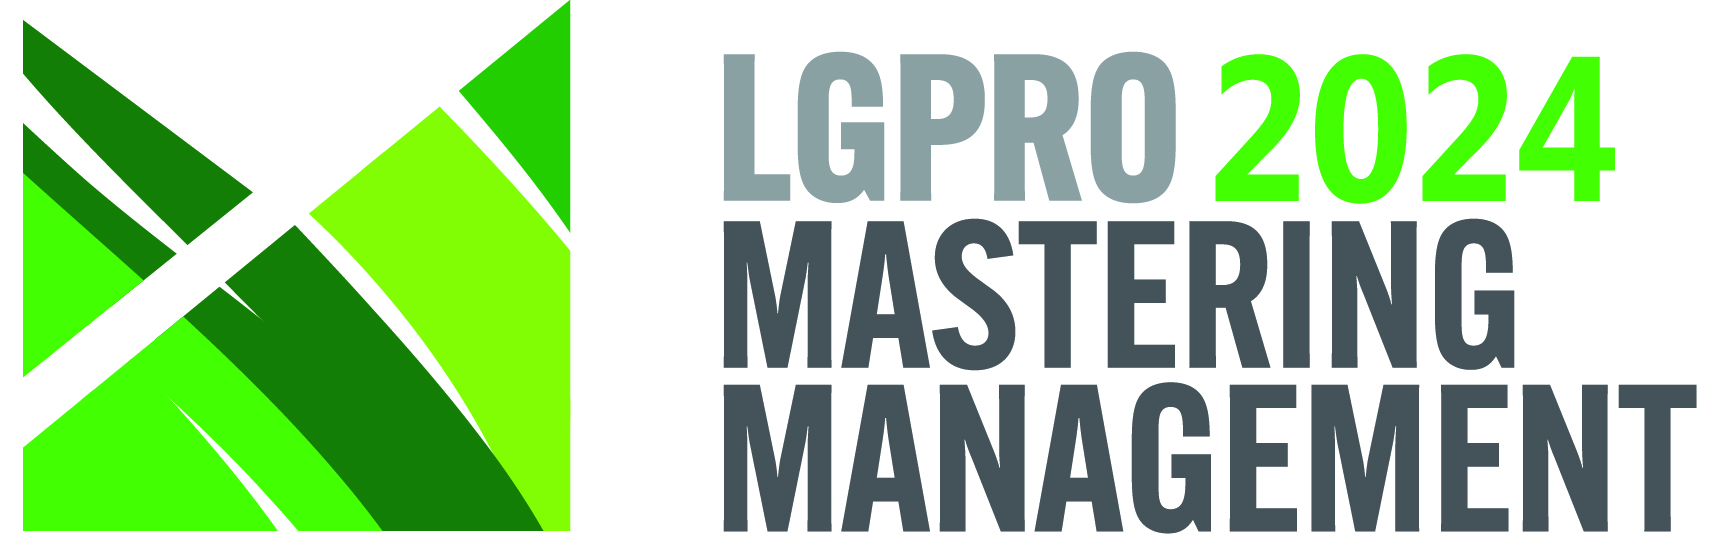 Mastering Management, Series 2 2024